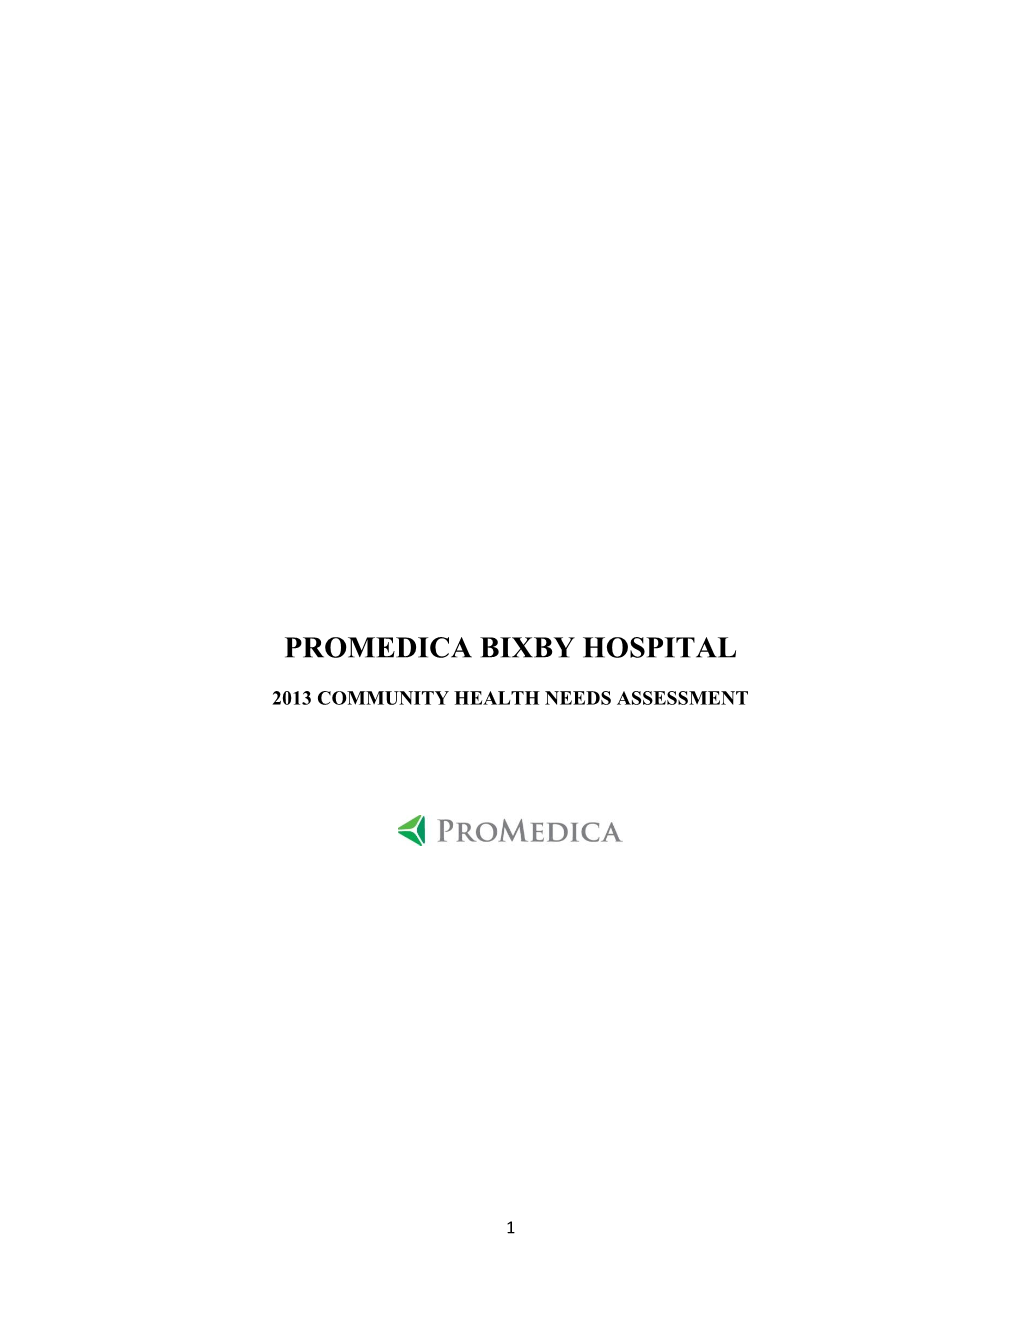 Promedica Bixby Hospital